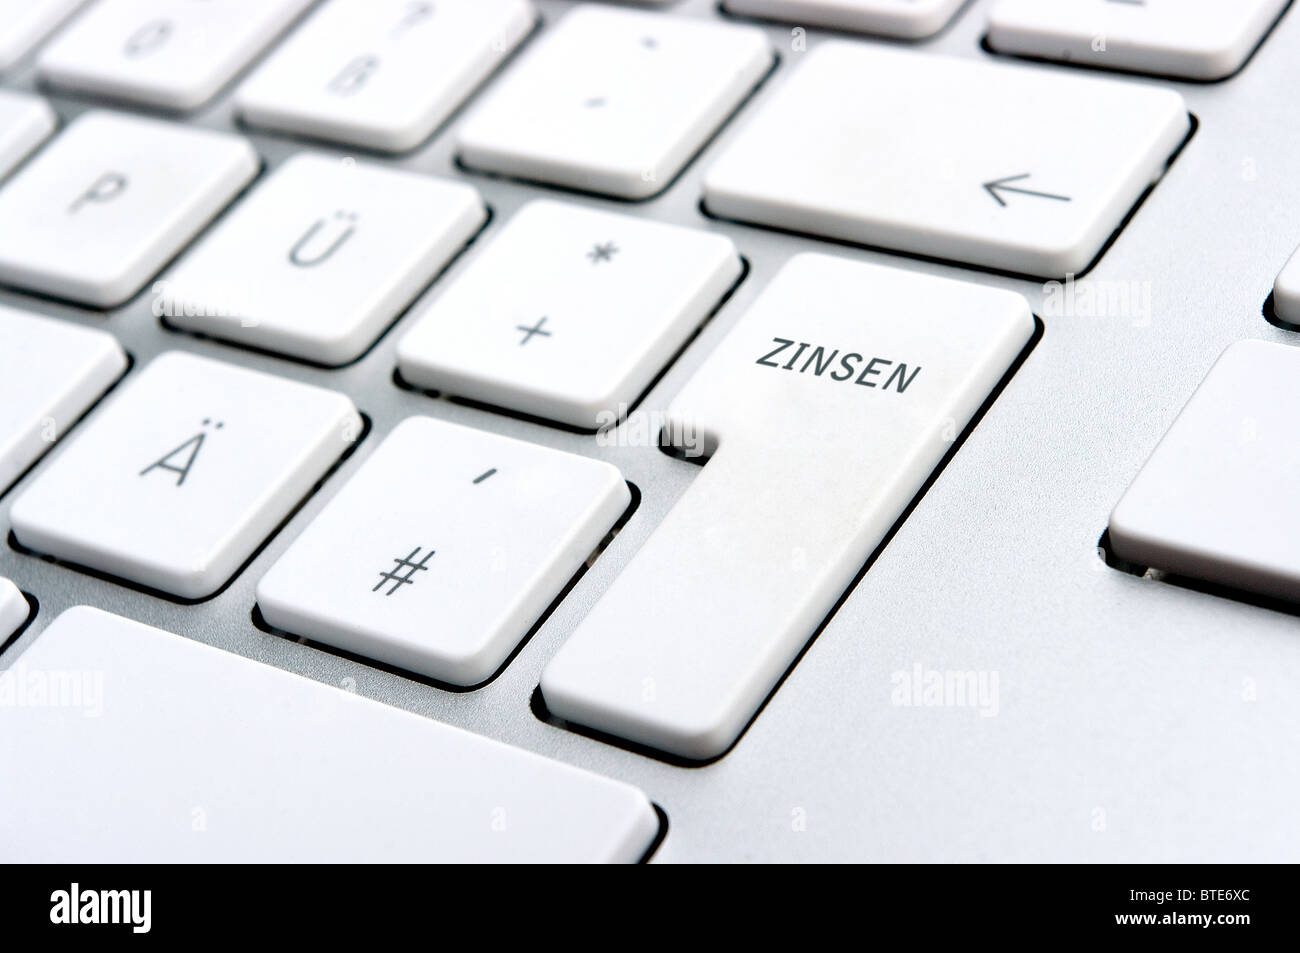 Zinsen Logo on the PC keyboard Stock Photo